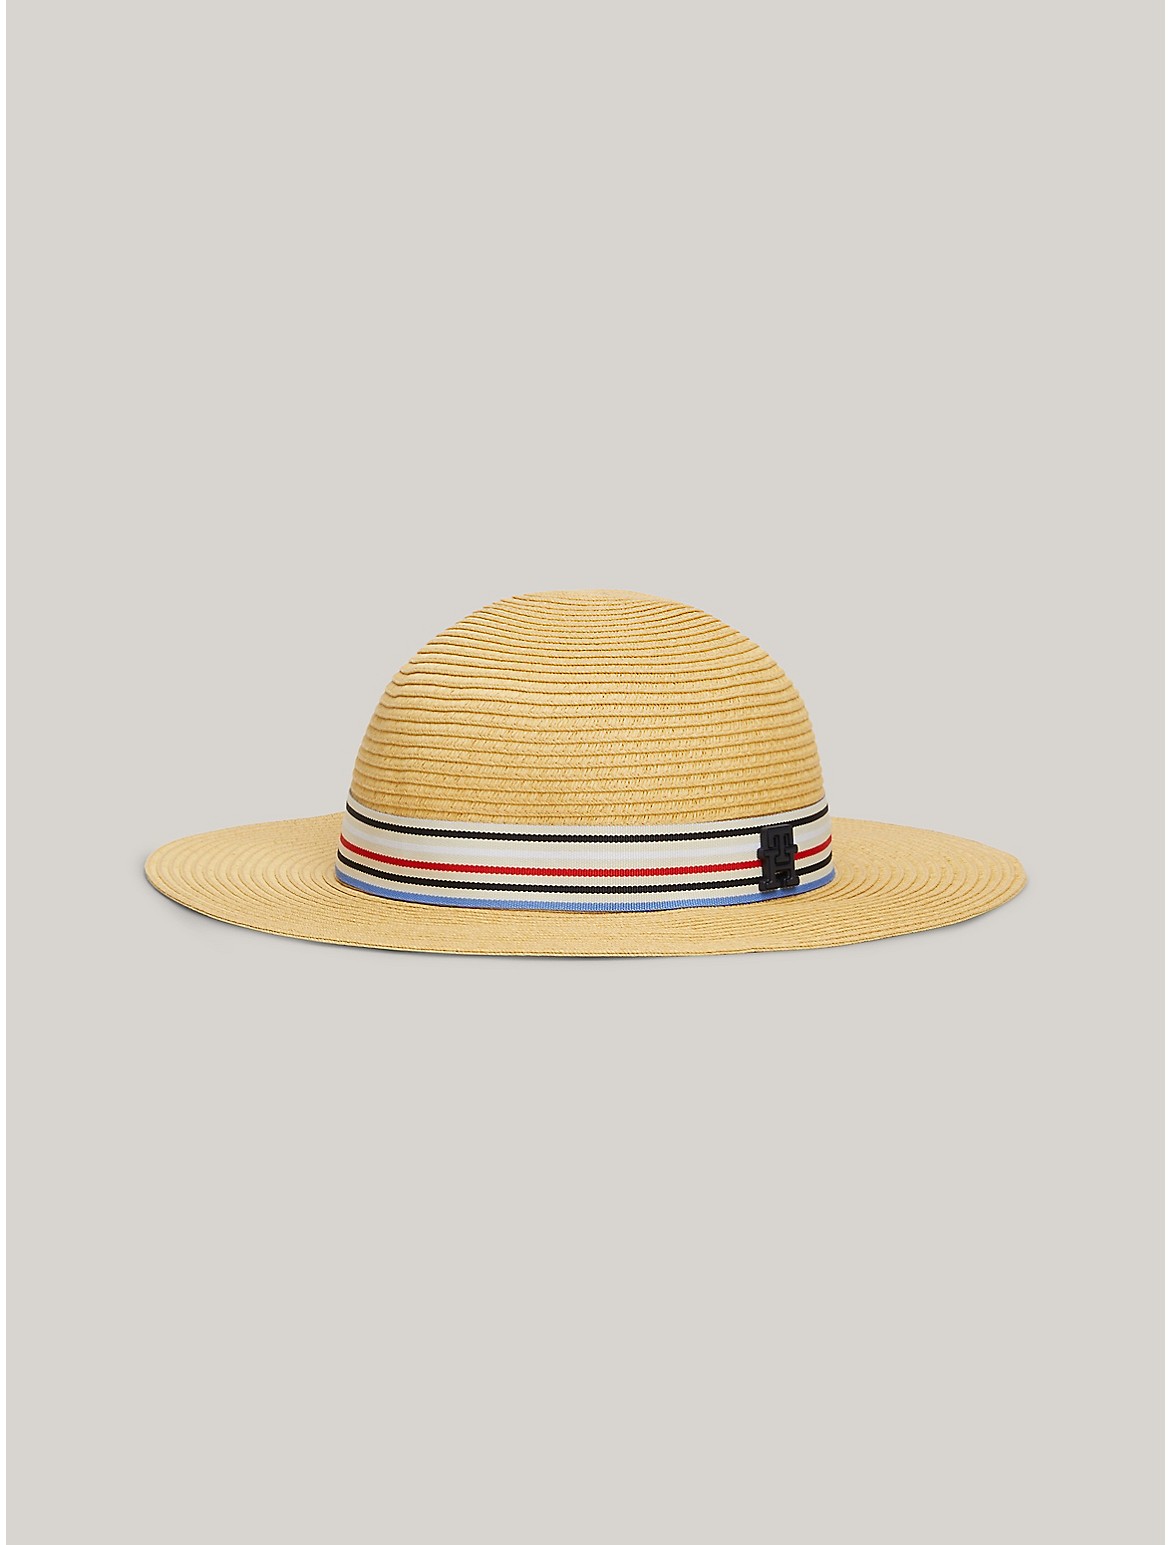 Tommy Hilfiger Girls' Kids' TH Stripe Sun Hat